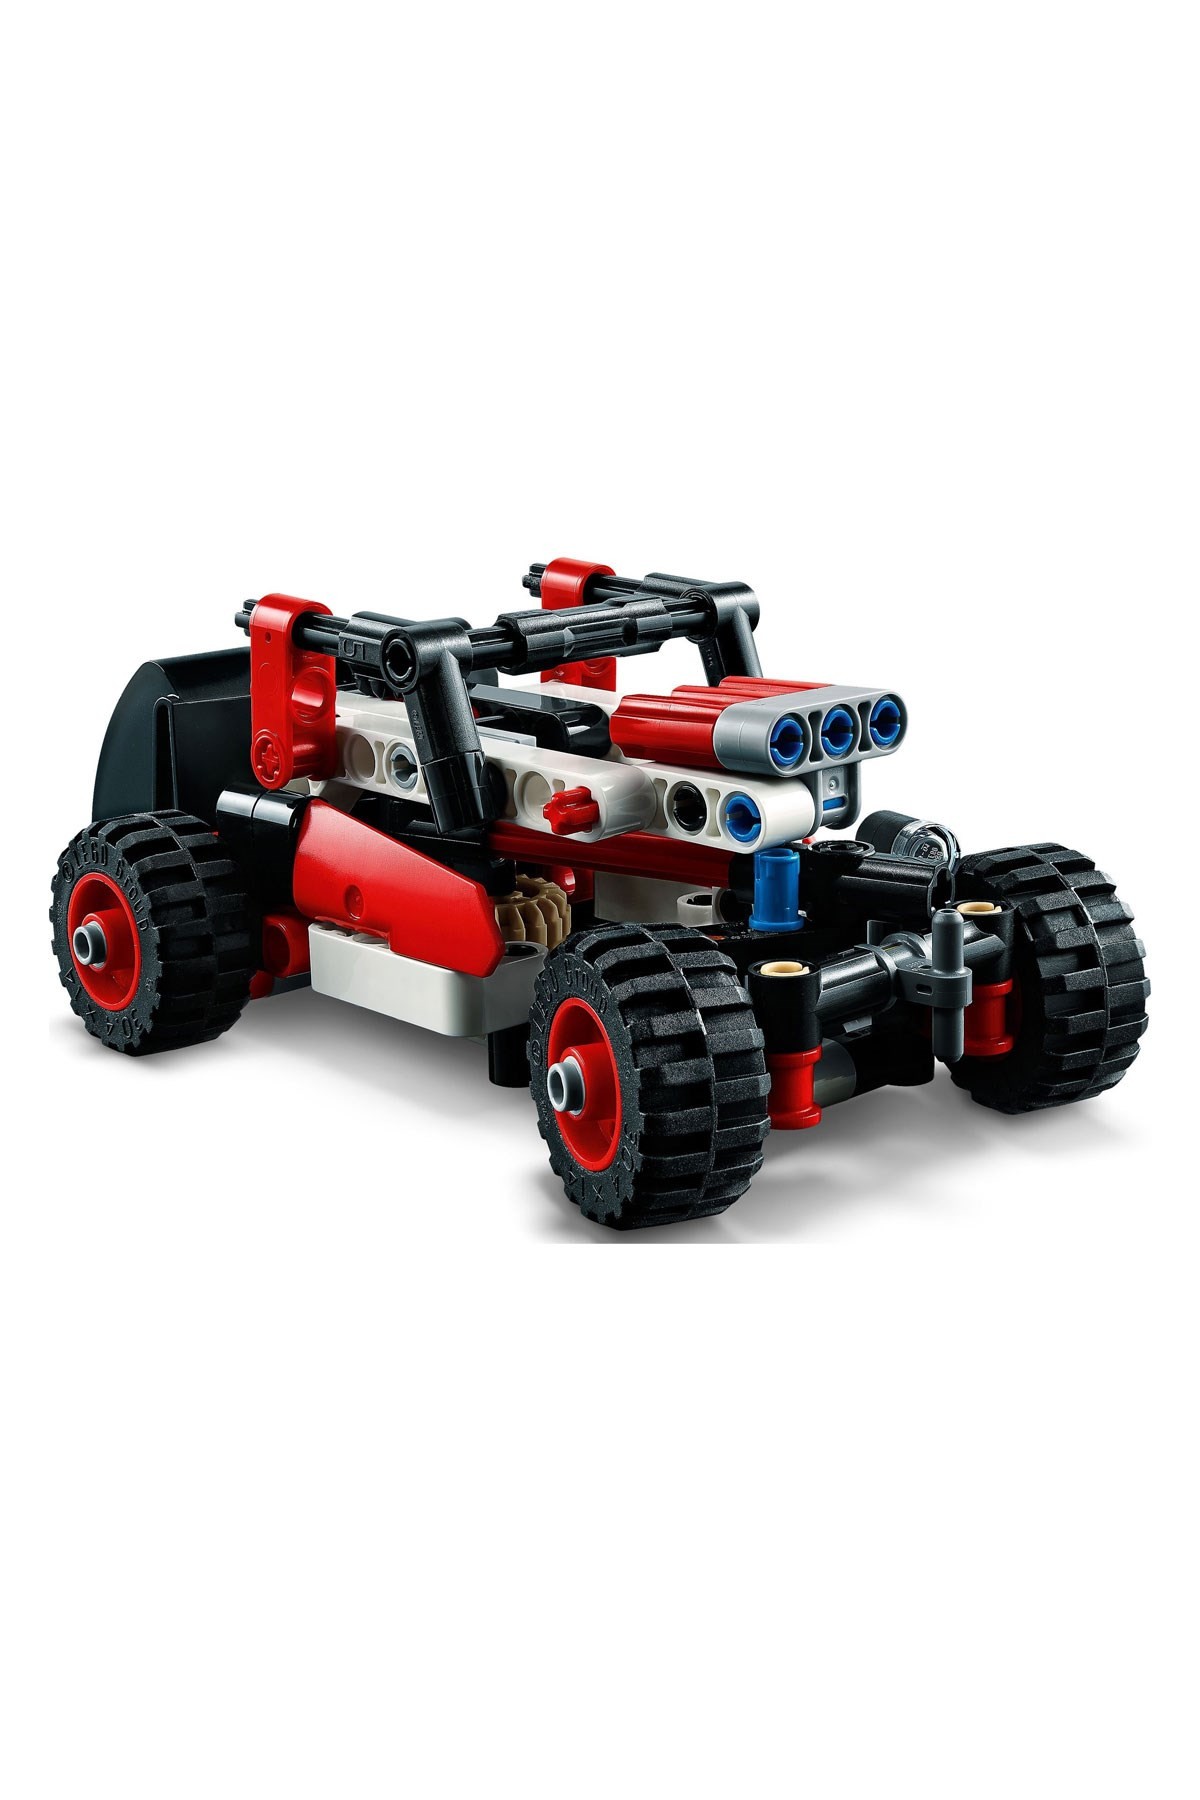 Lego Technic 42116 Skid Steer Loader